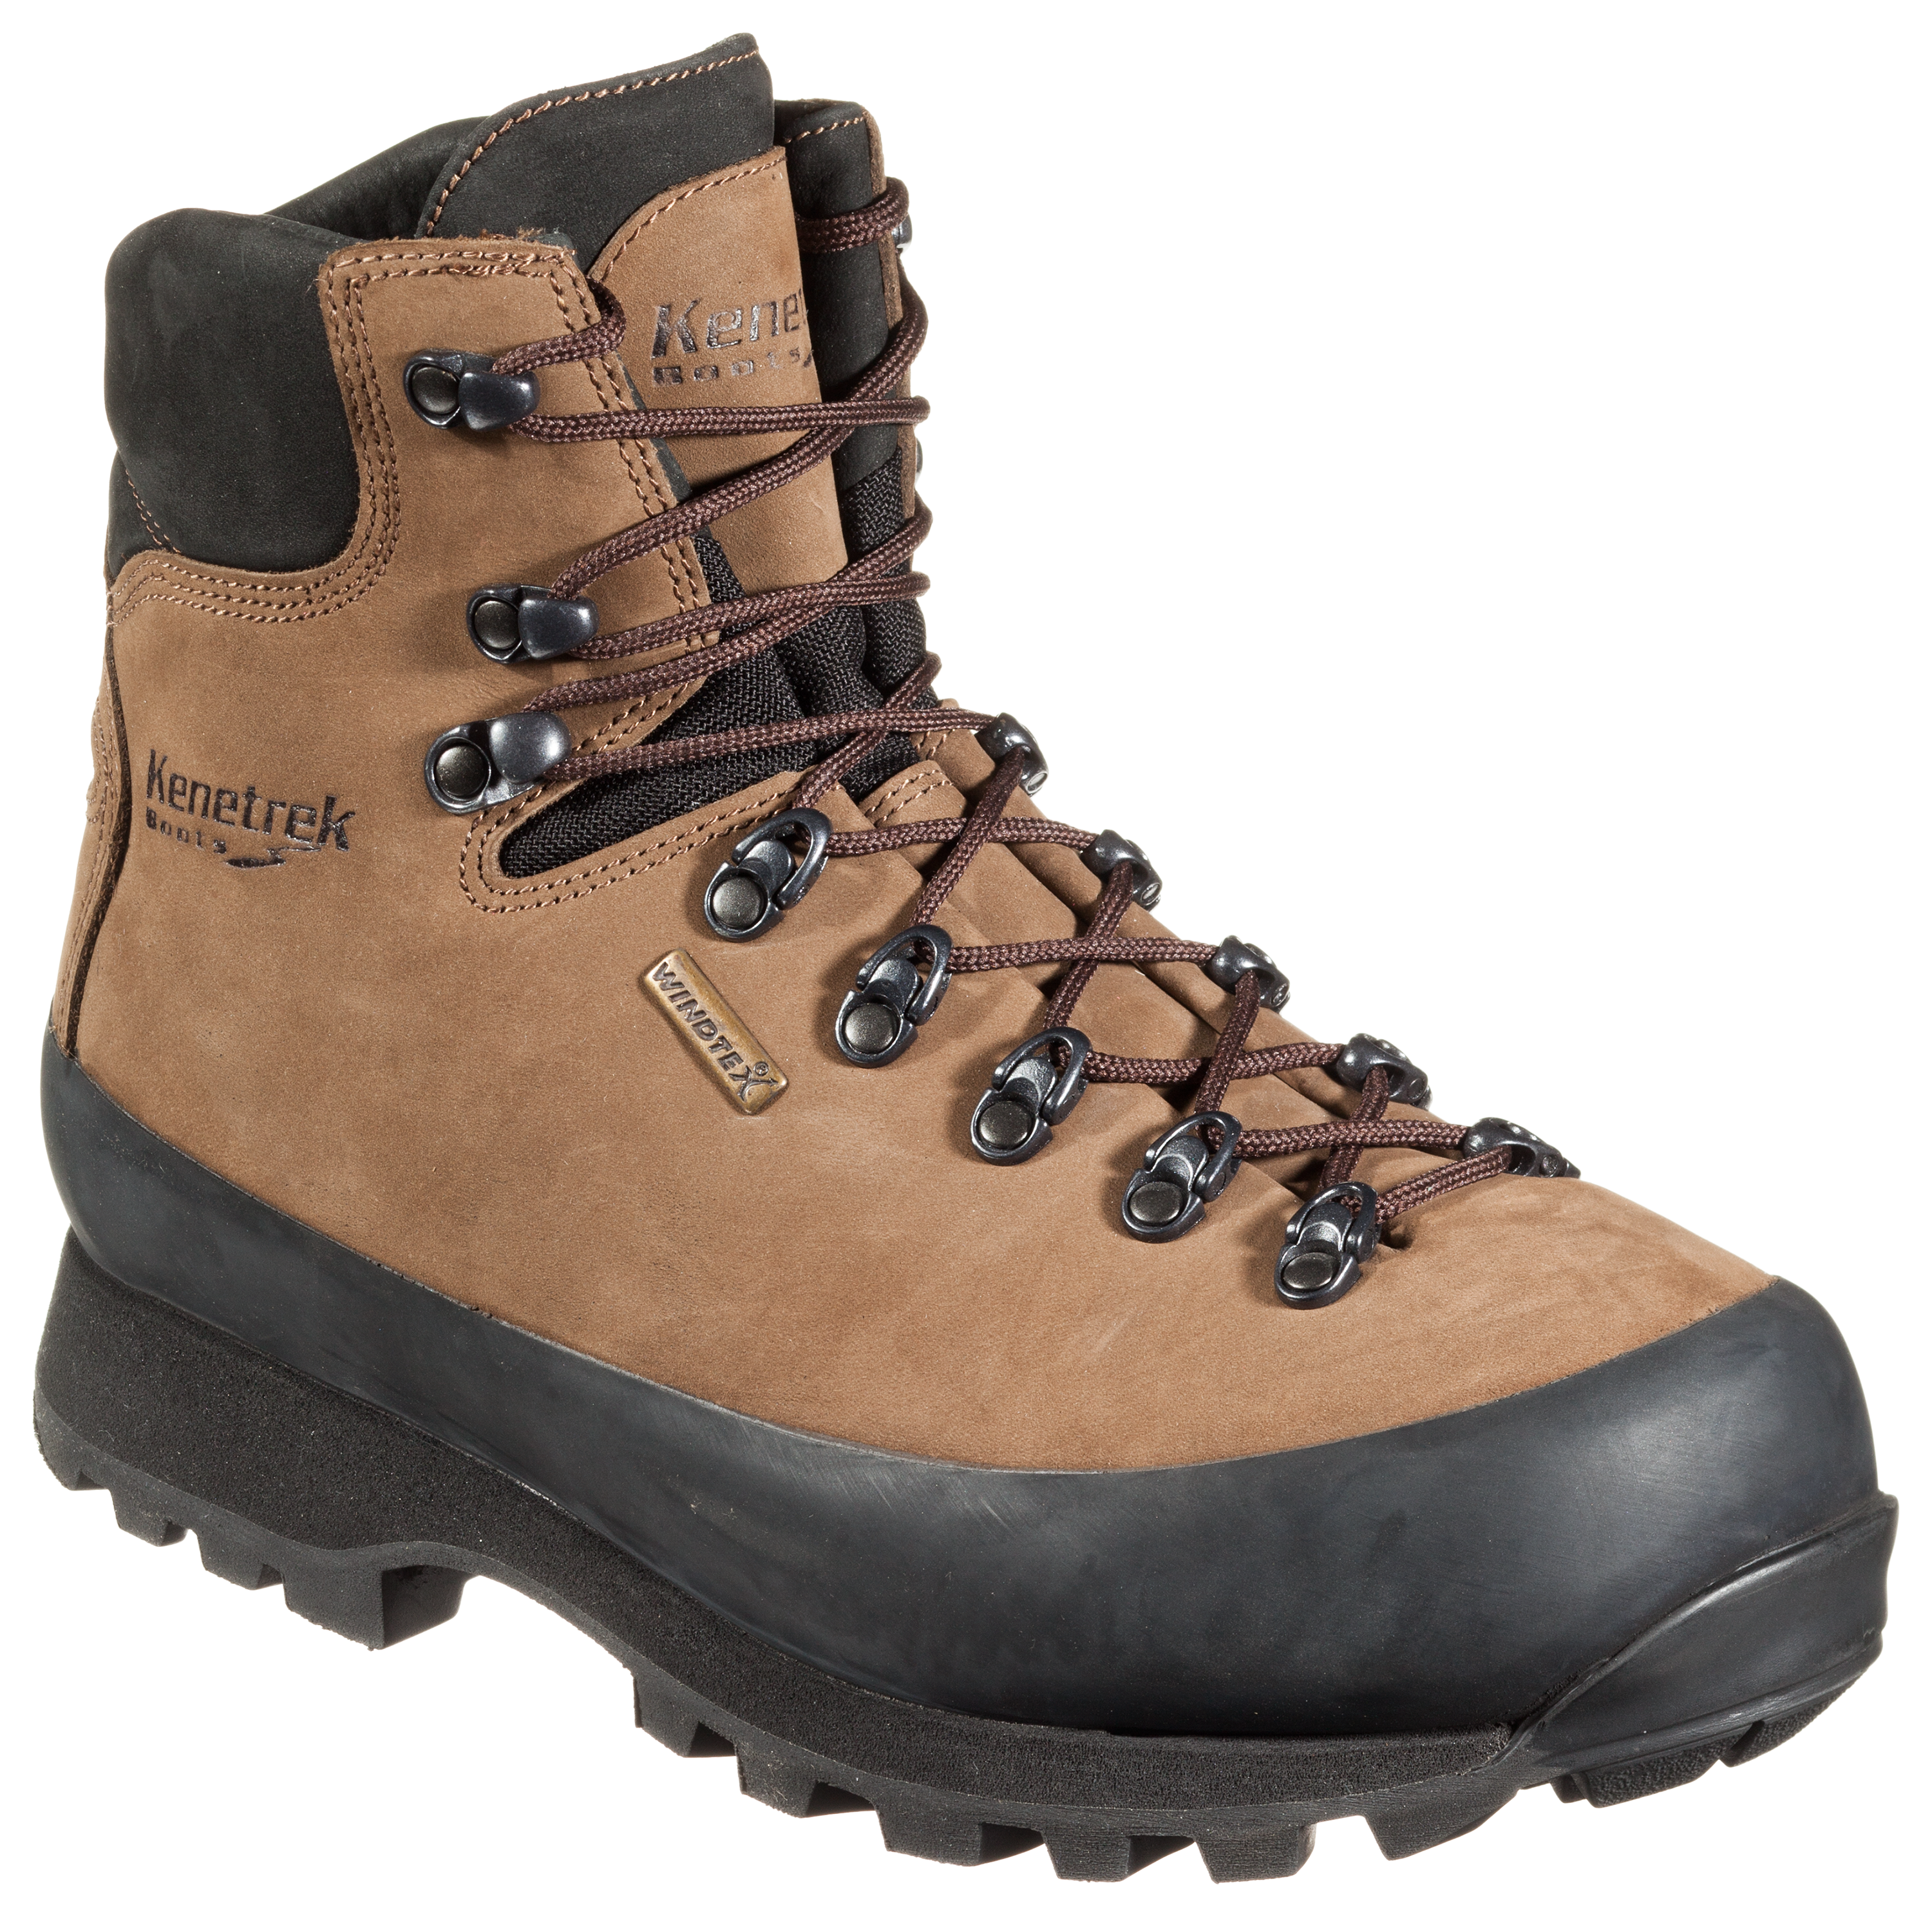 Kenetrek Hardscrabble Waterproof Hiking Boots for Men - Brown - 10.5M